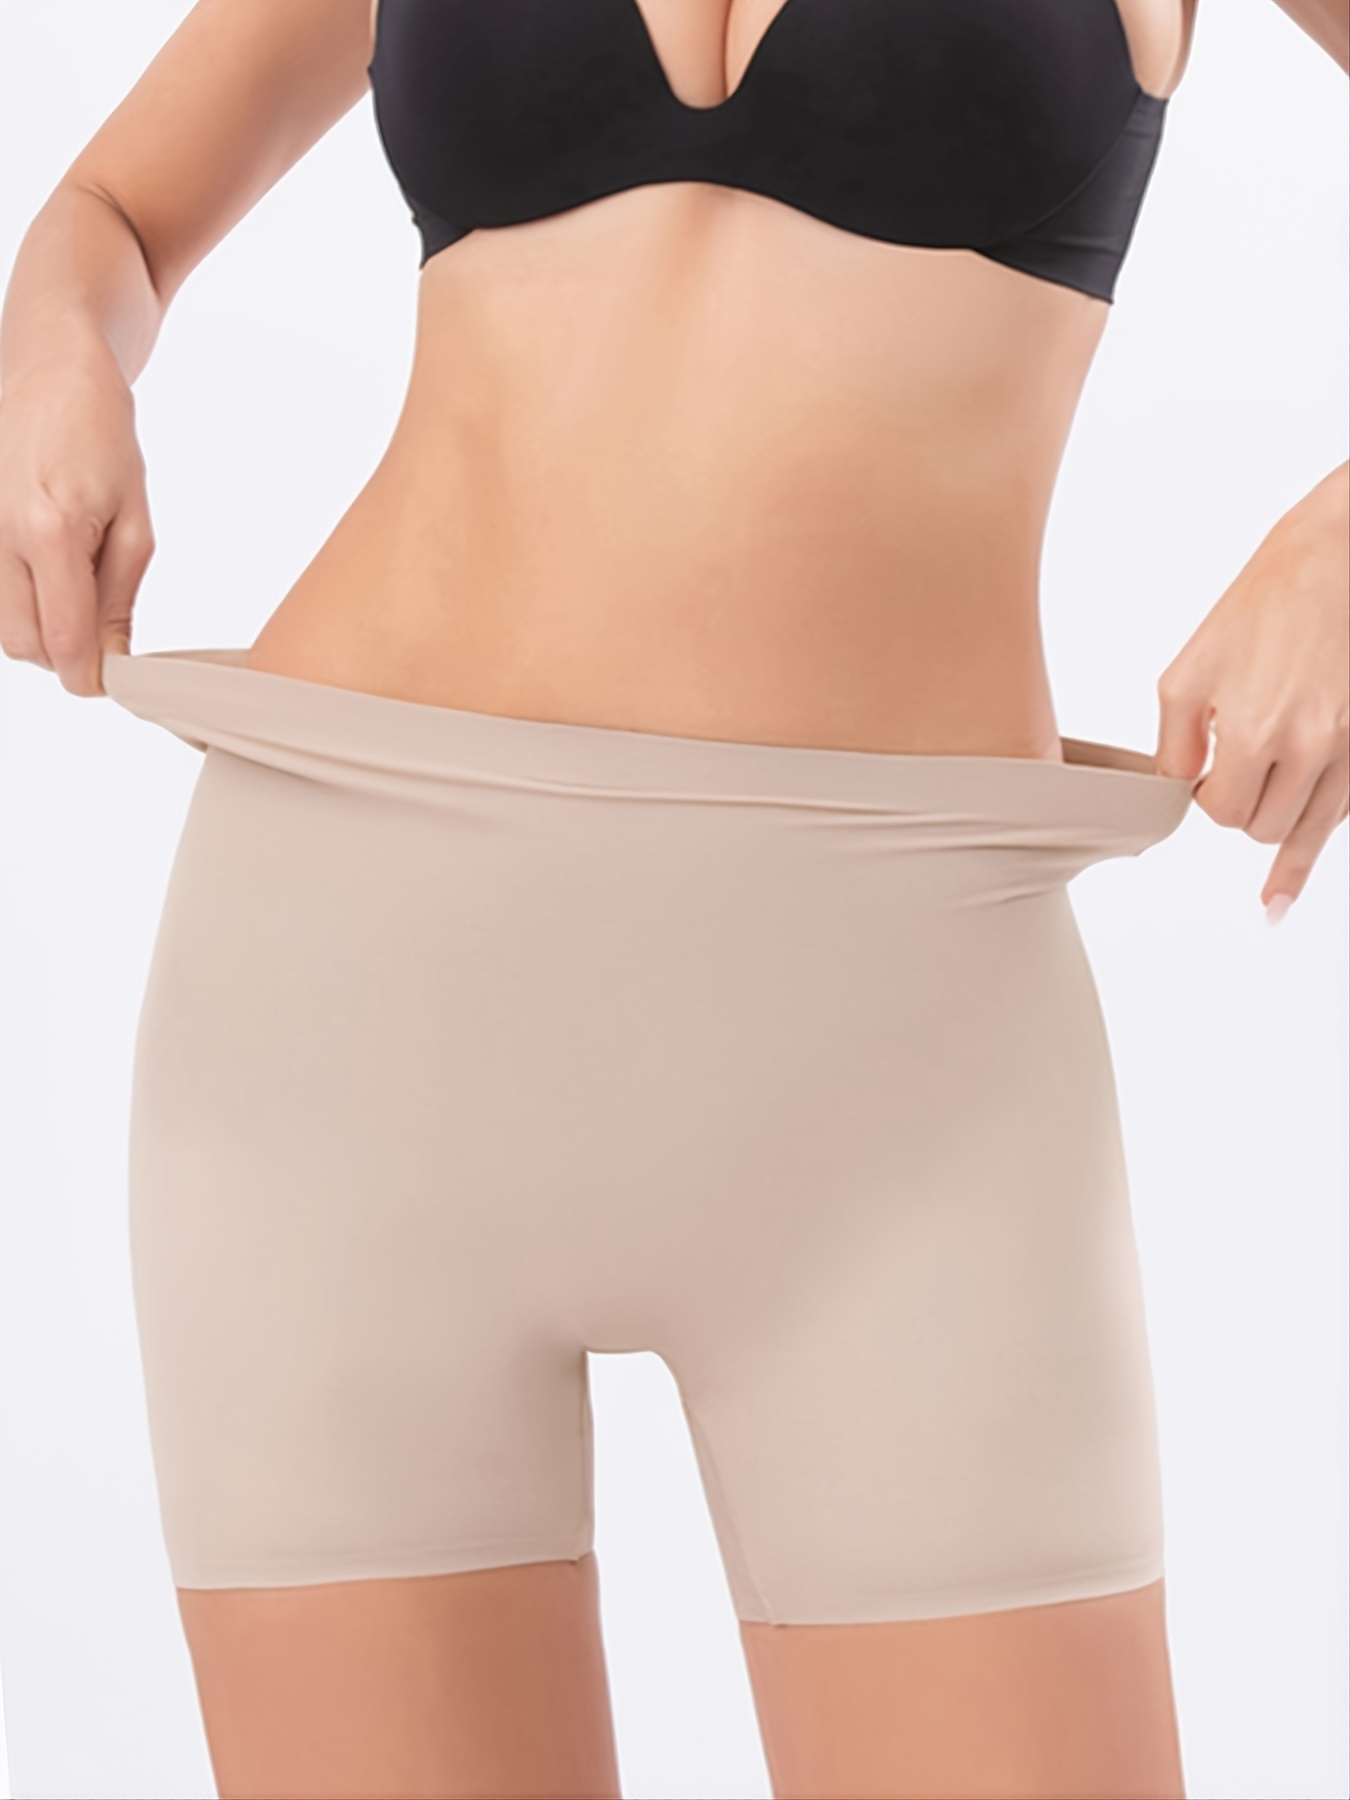 Seamless Shaping Boyshorts Panties for Women Tummy Control